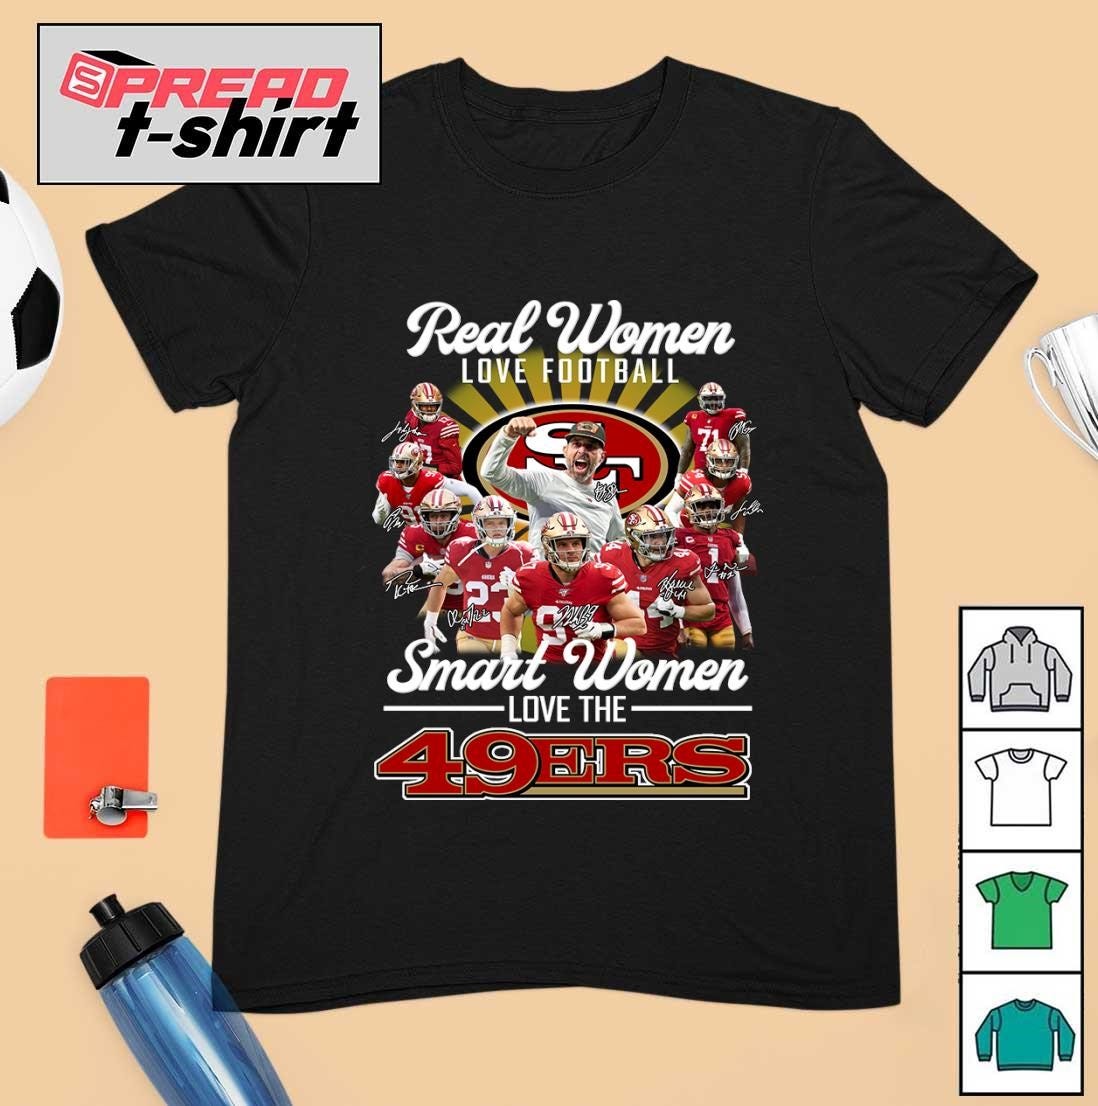 Real Women Love Football Smart Women Love The Francisco 49ers Shirt